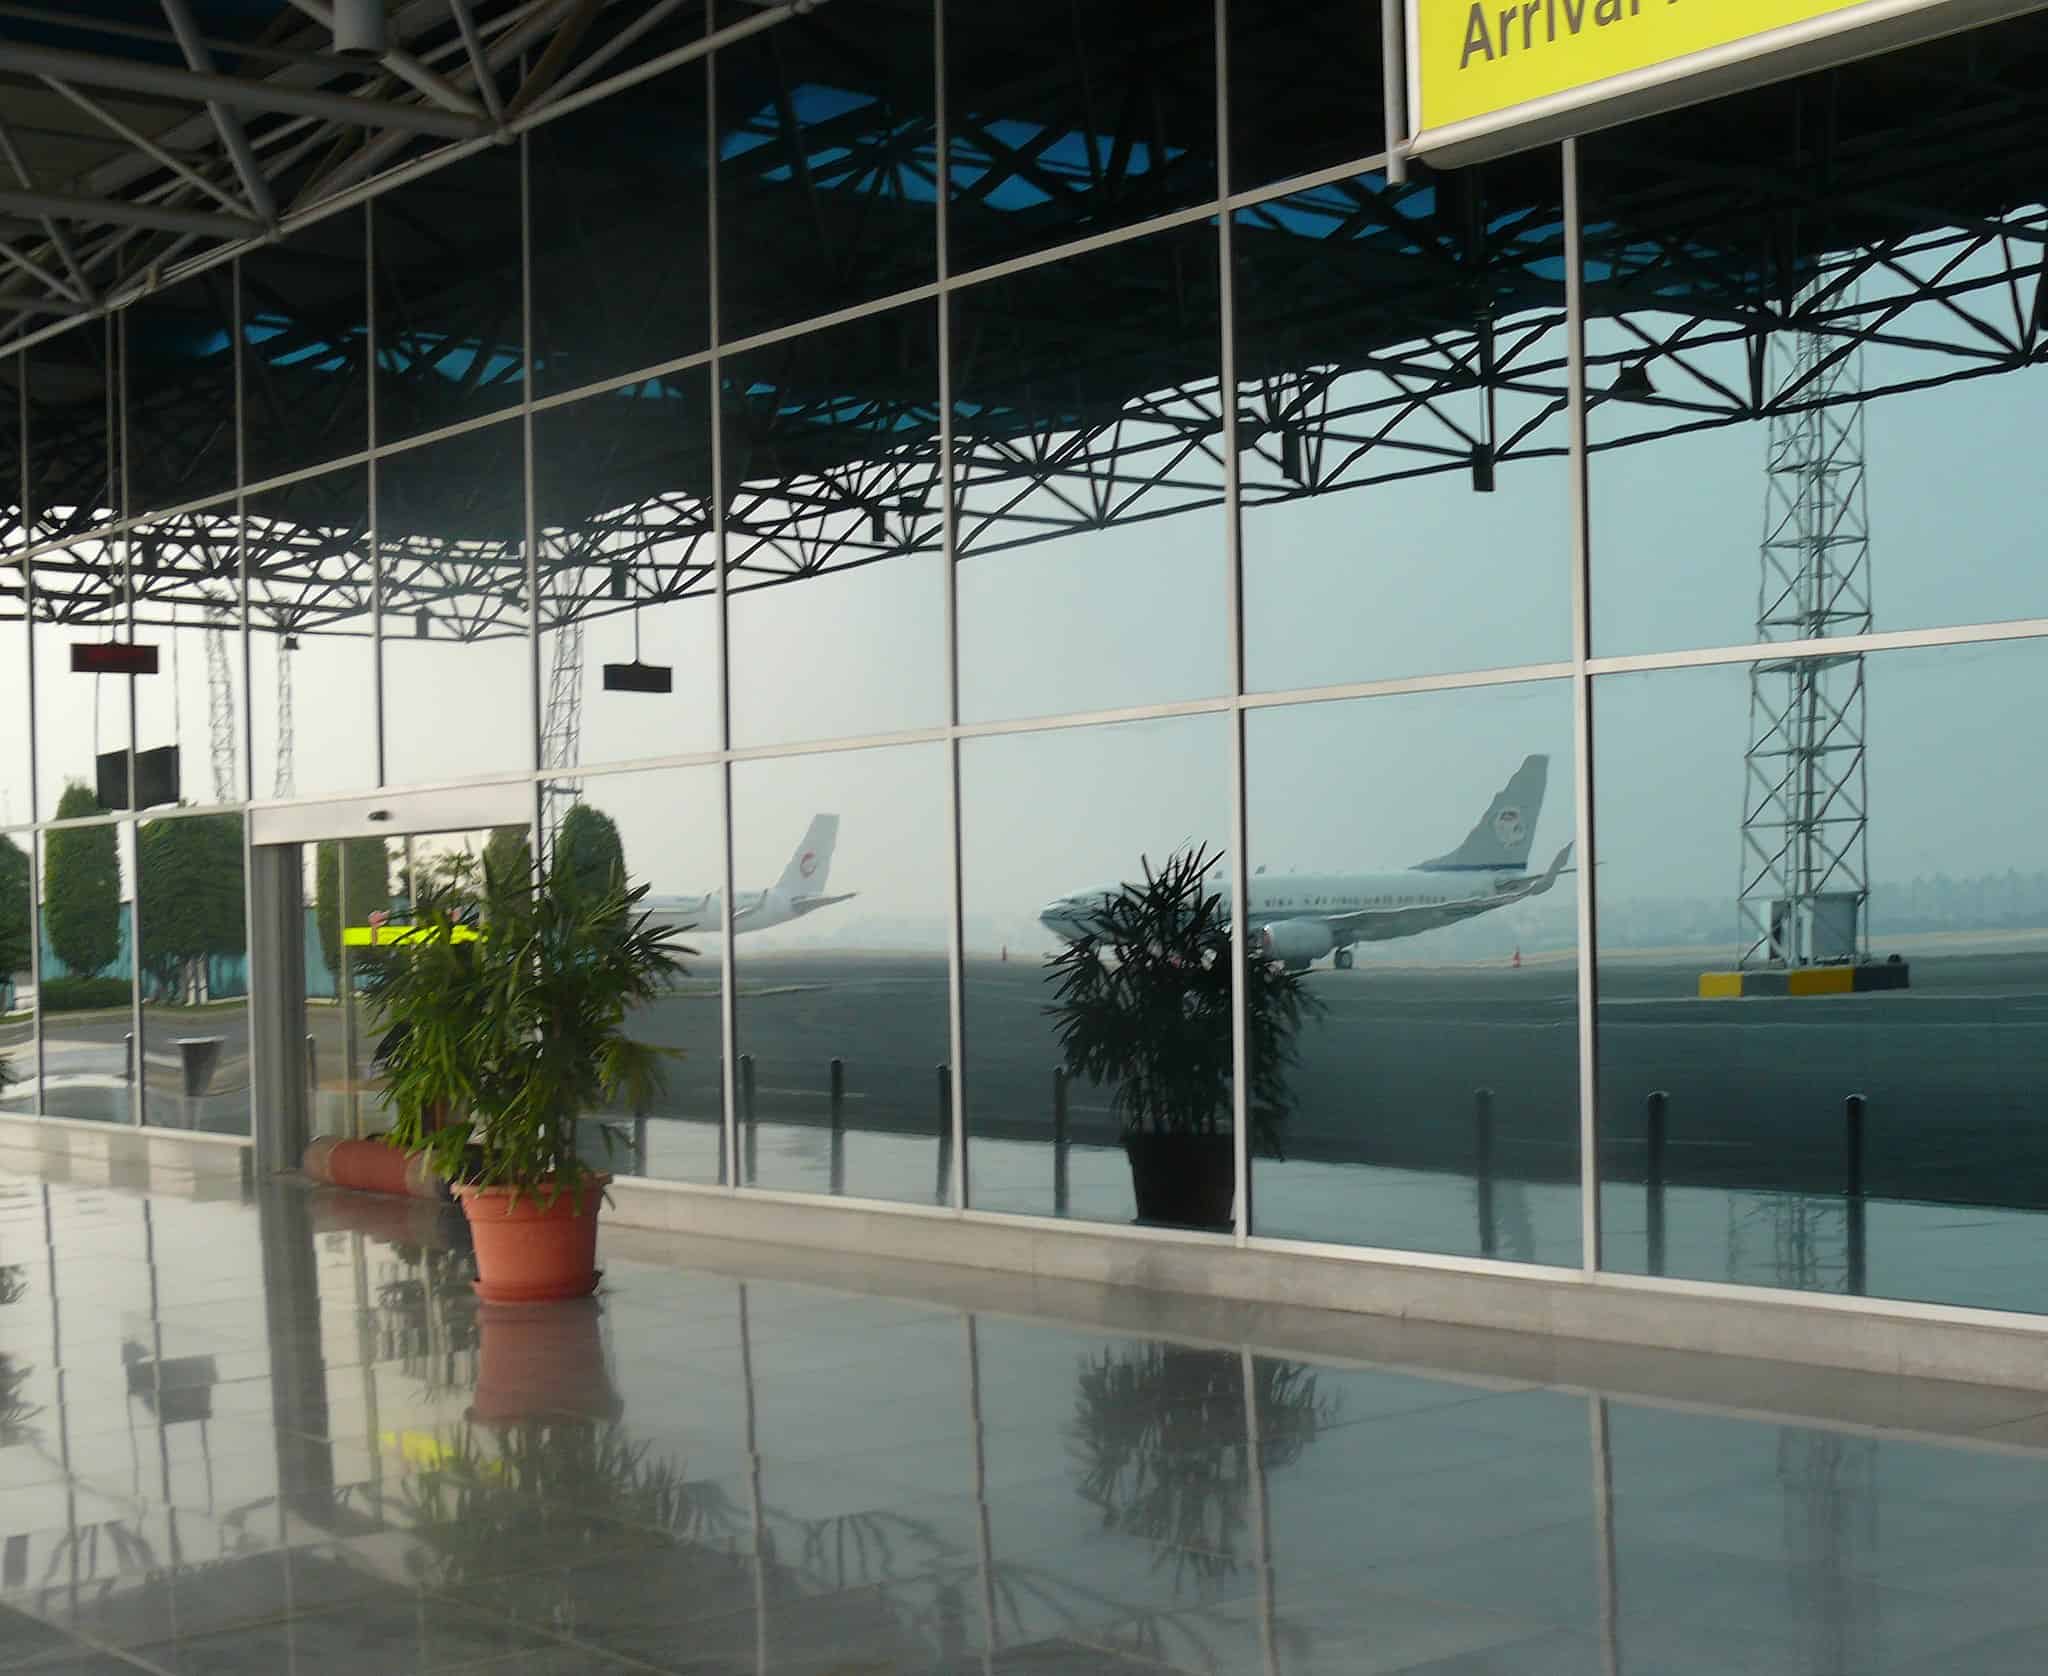 Cairo International Airport Arrivals [Wikipedia]